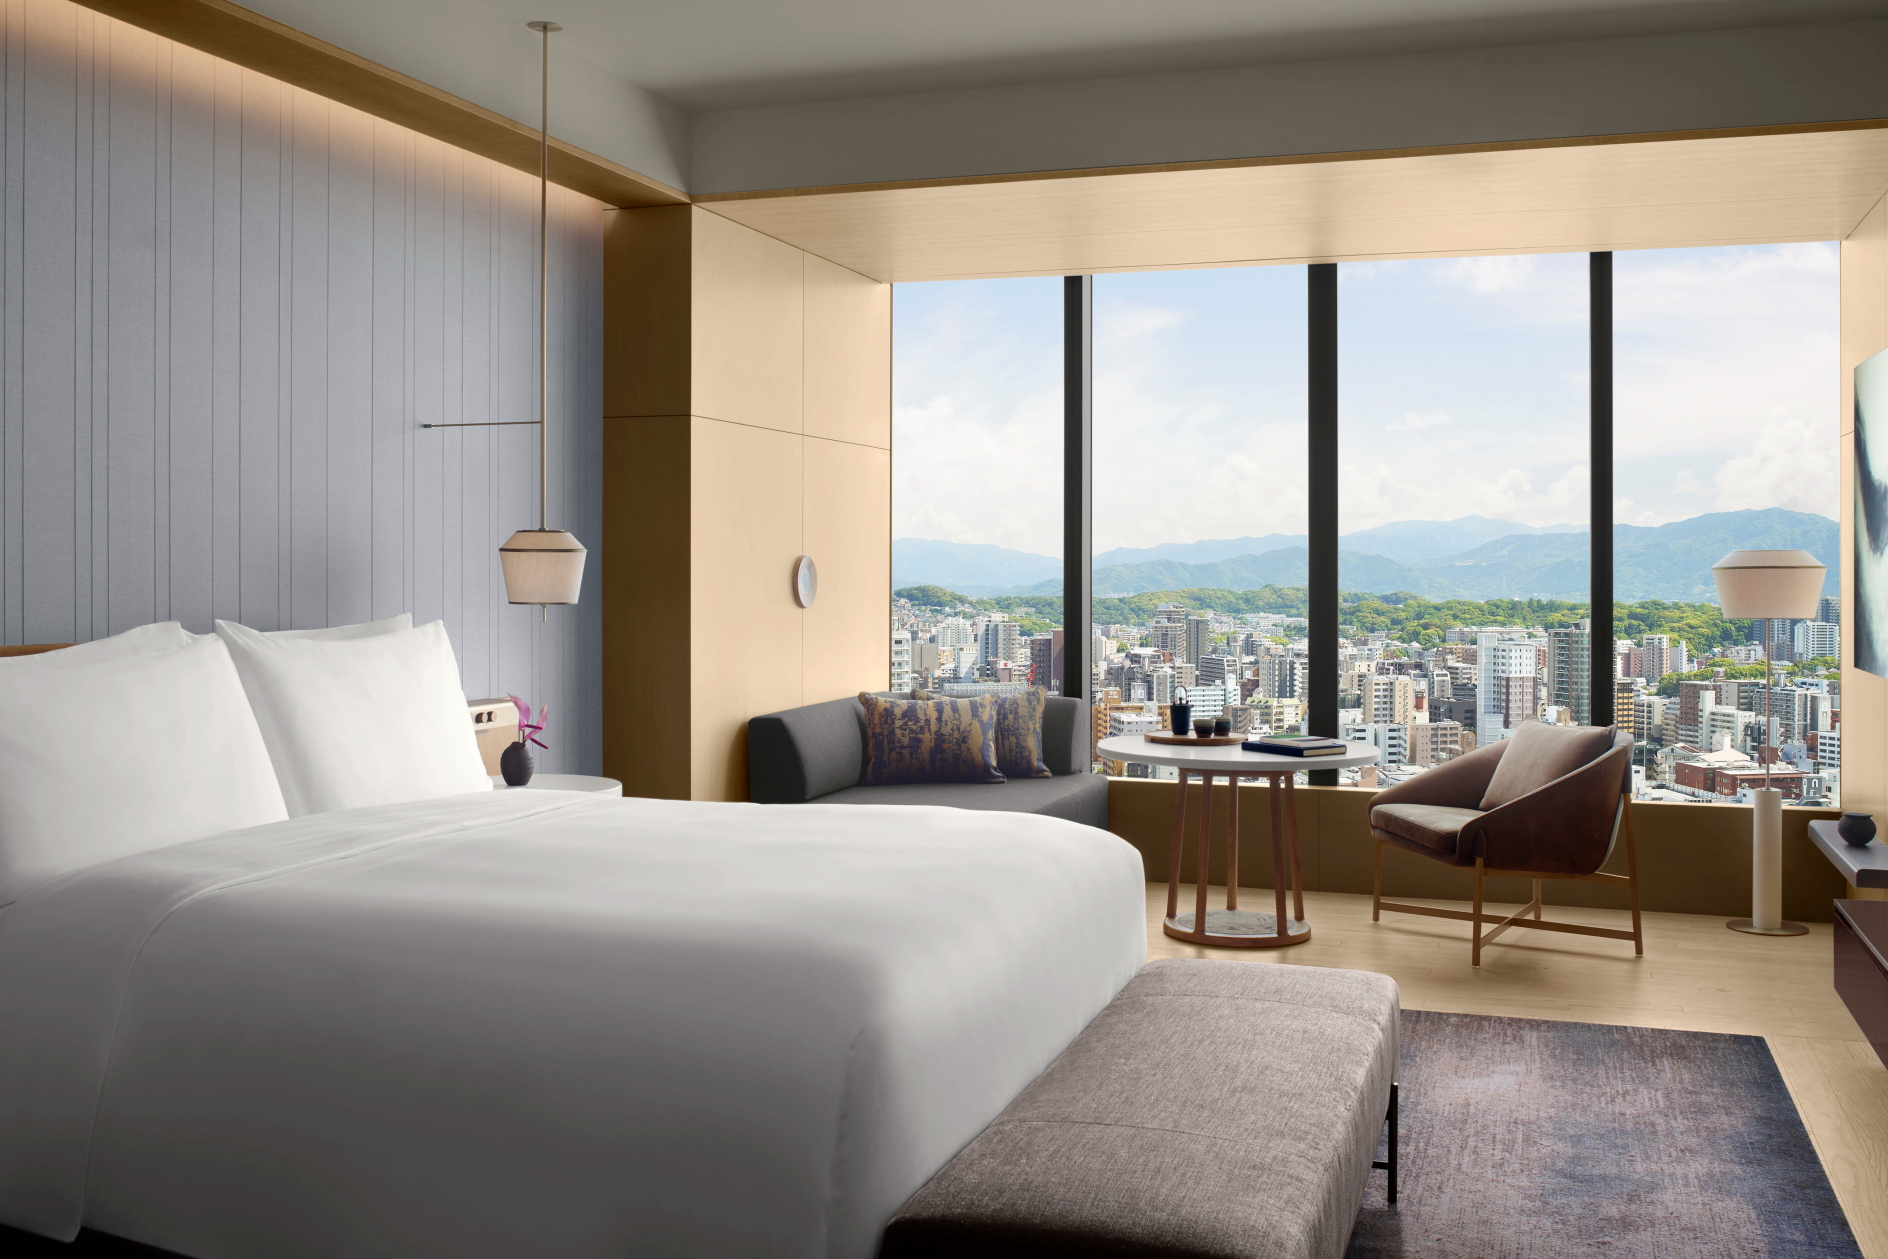 Deluxe Room at The Ritz-Carlton, Fukuoka in Japan. Click to enlarge.